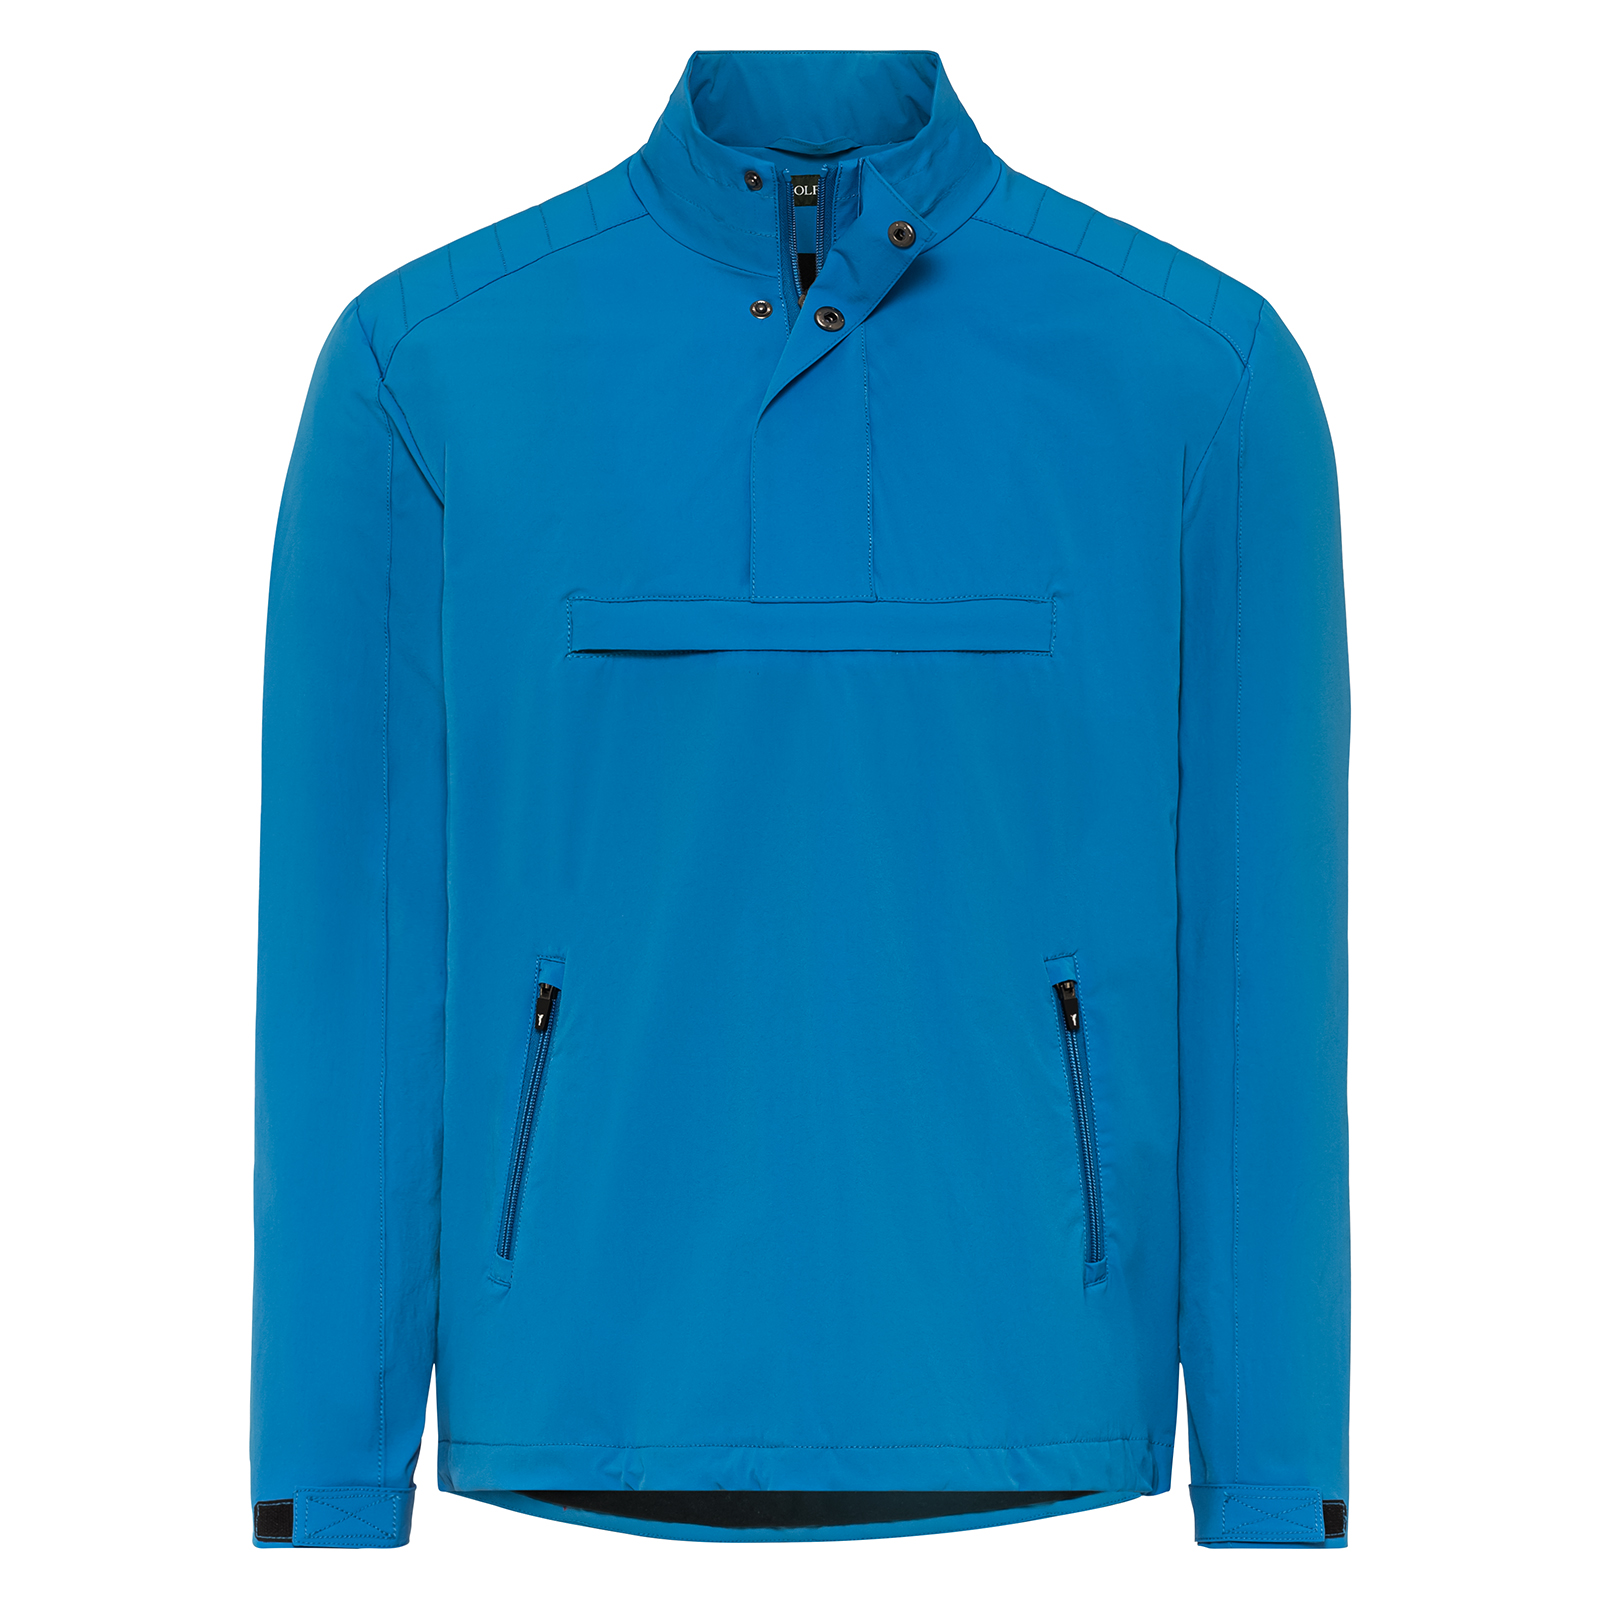 Men’s elegant slip-on golf jacket with stretch component